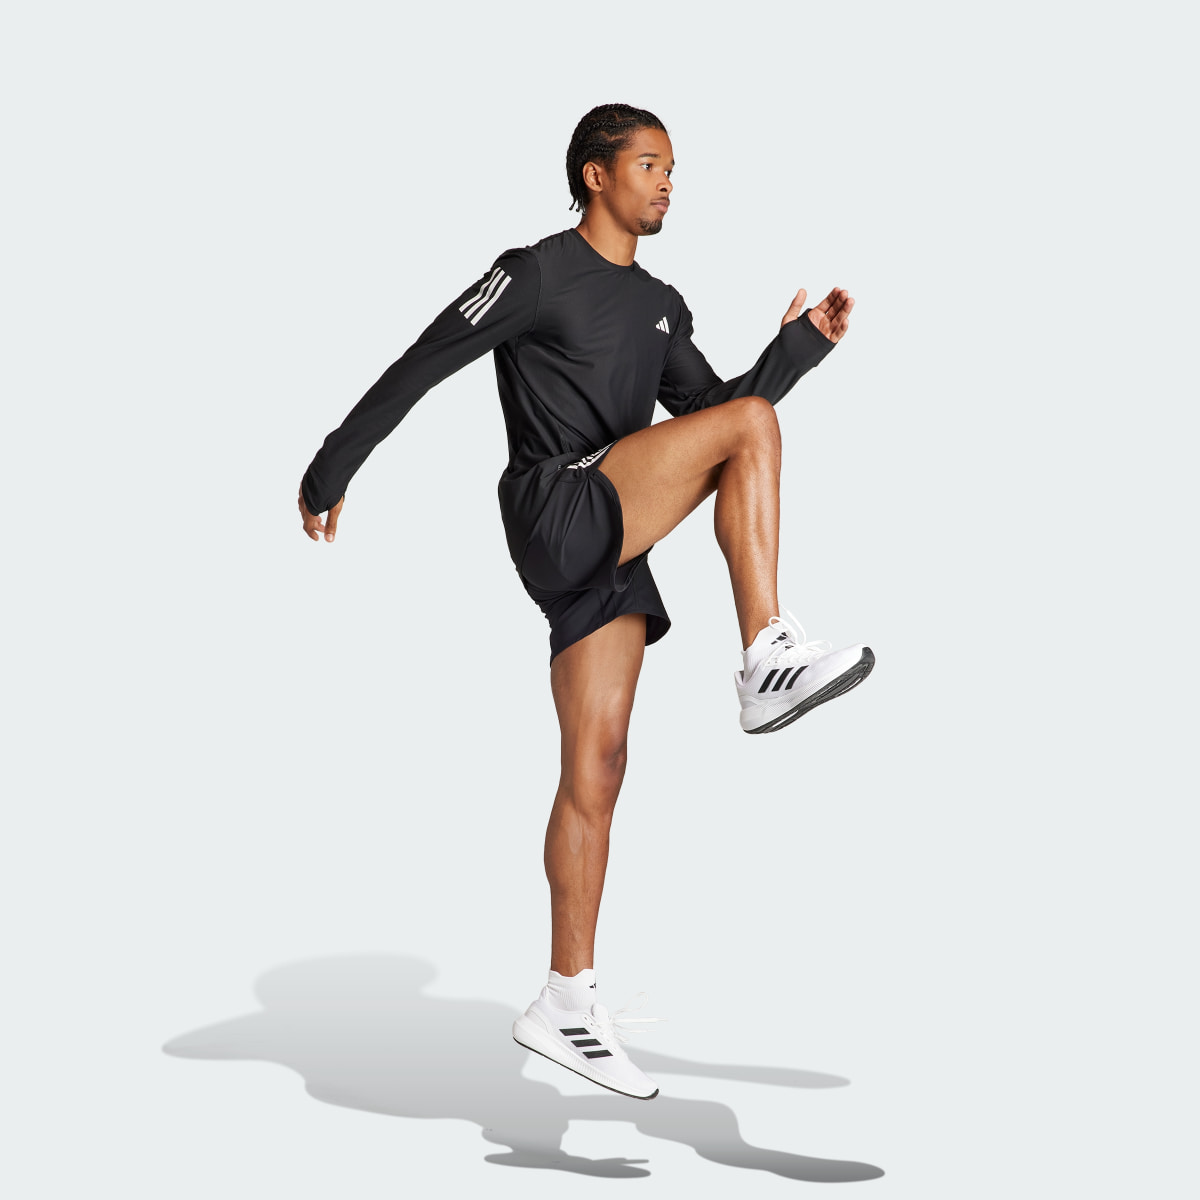 Adidas Own The Run Long-Sleeve Top. 4